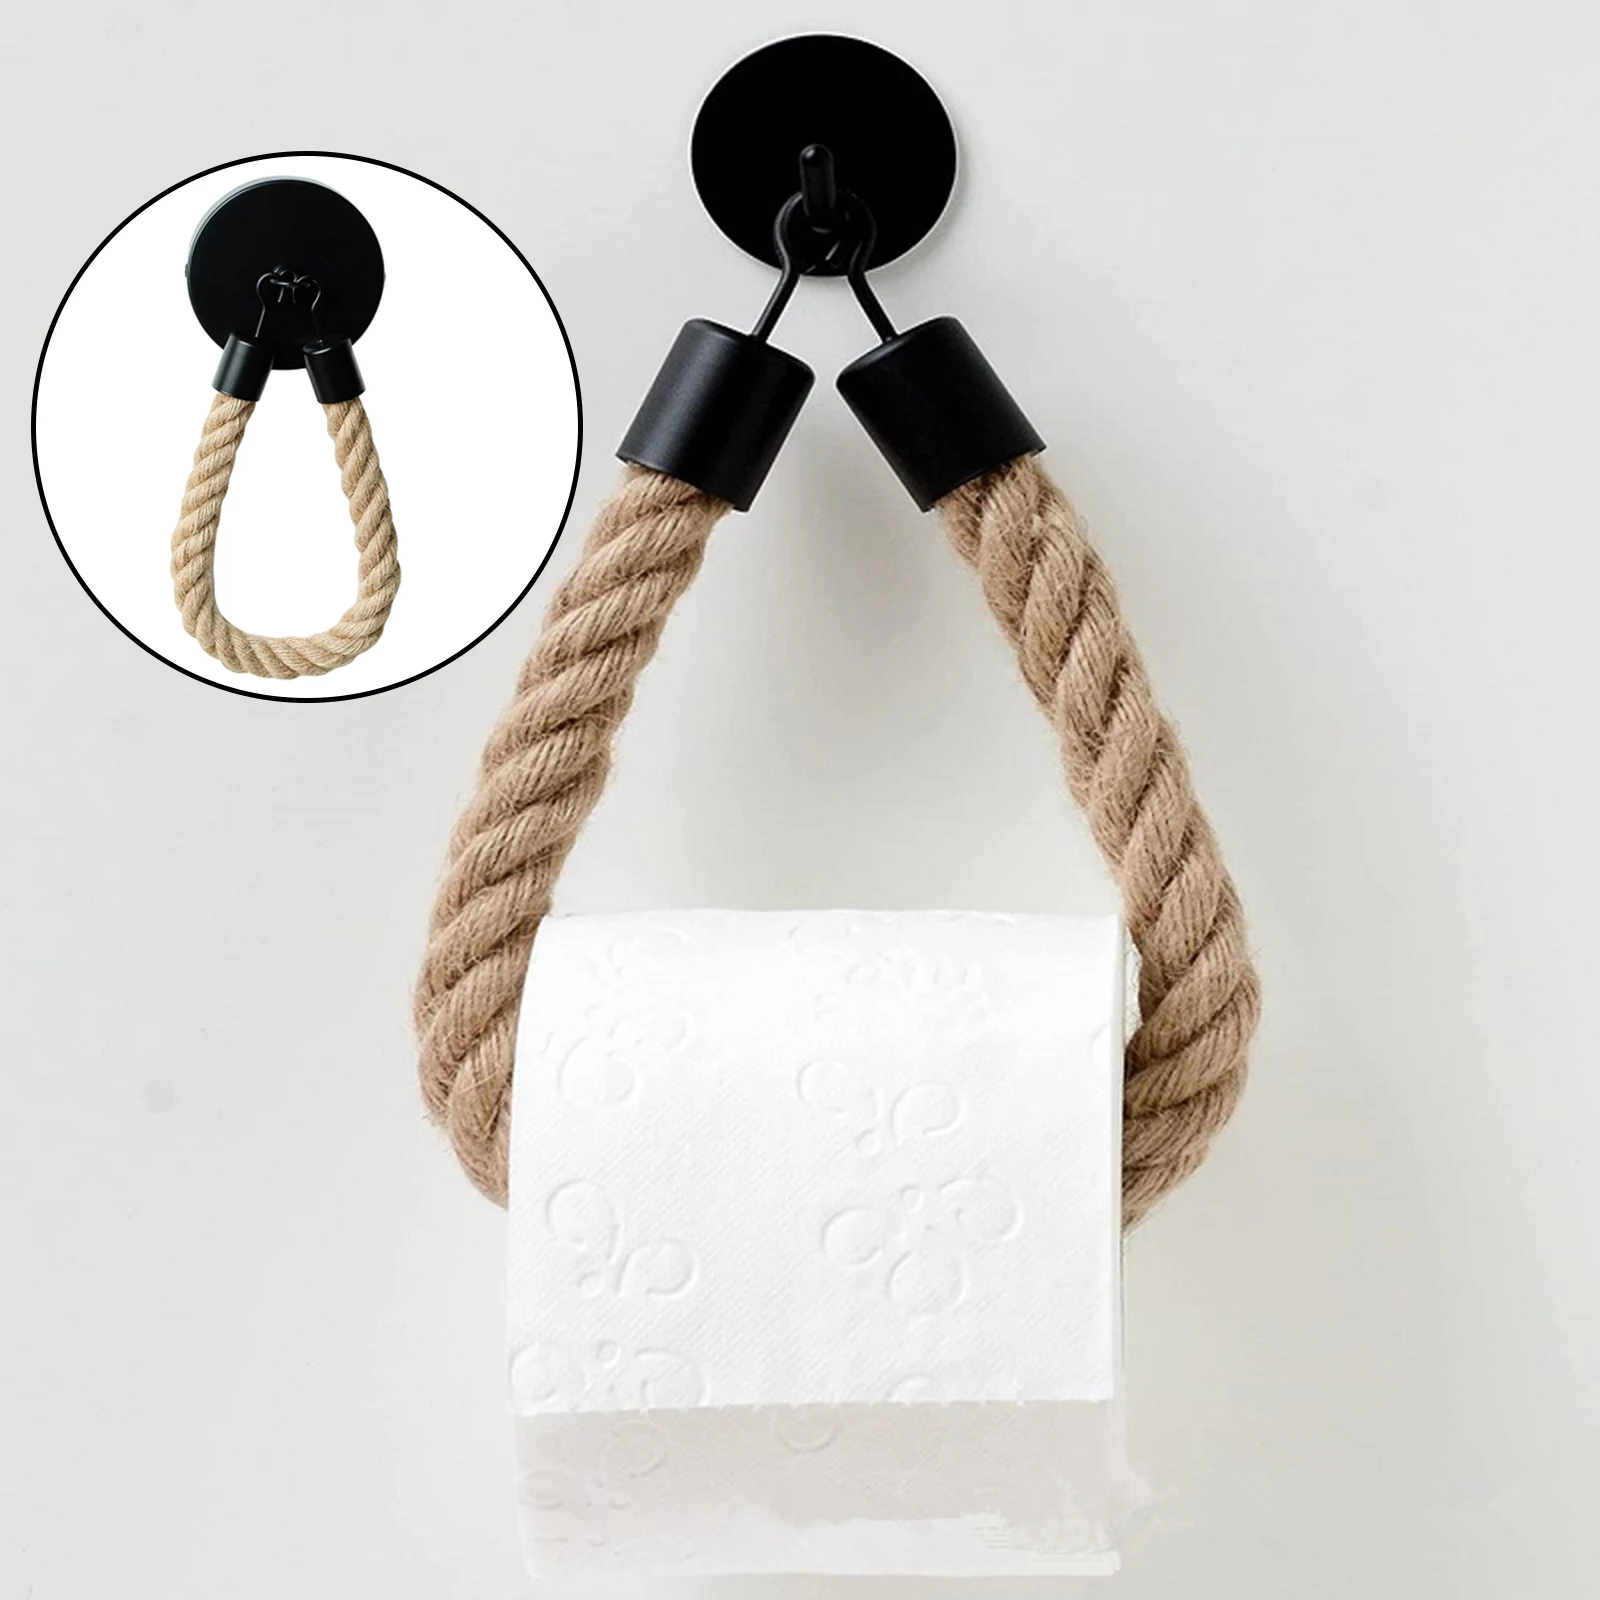 Towel Paper Holder Rope Toilet Paper Holder Roll Holder Towel Rack Wall Mounted Tissue Holder